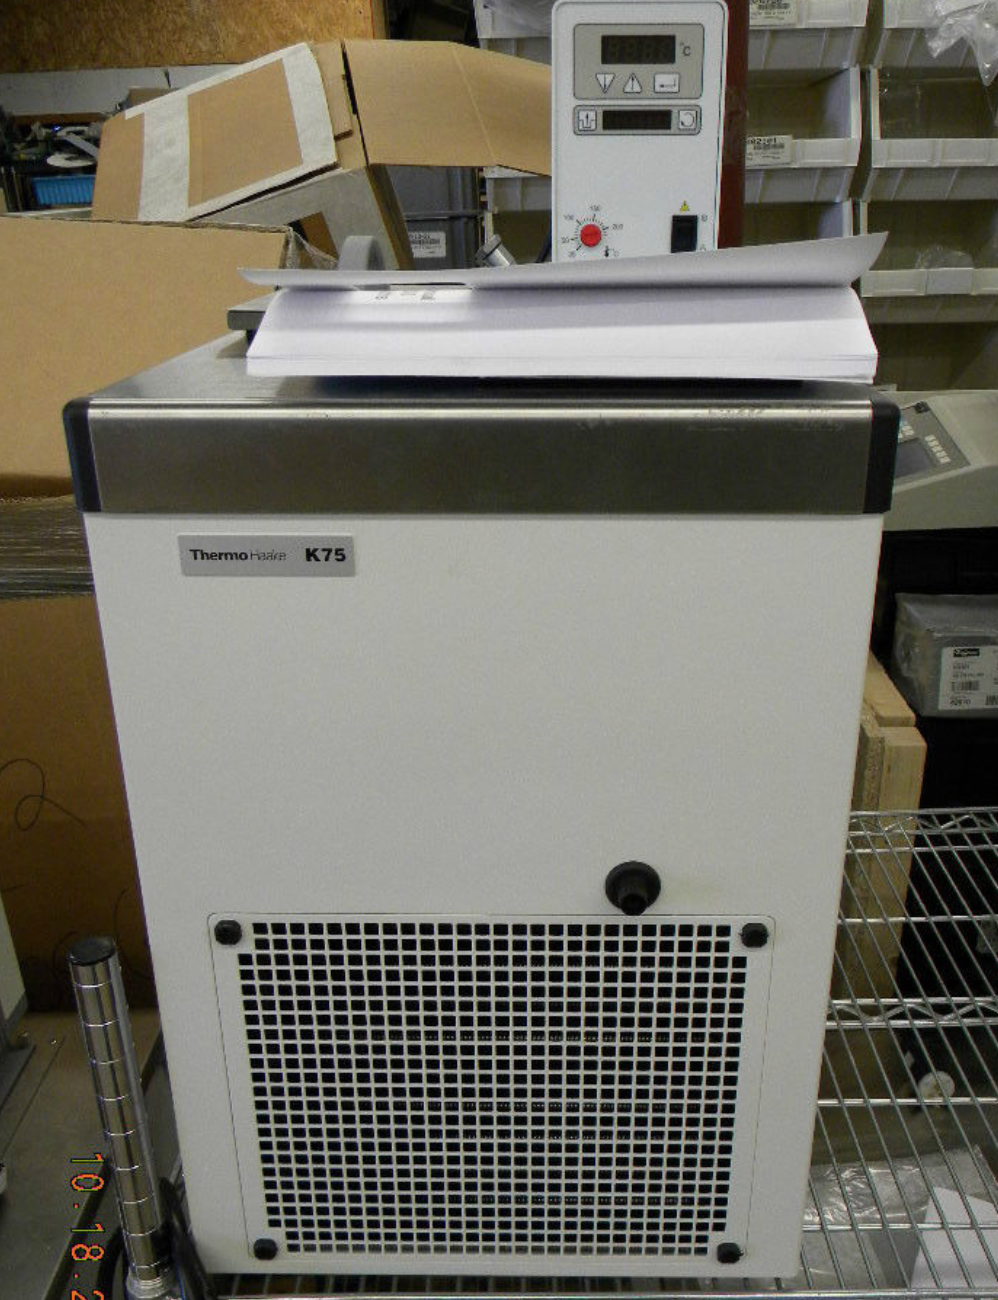 Thermo Haake DC50 Thermo Haake K75 Refrigerated Circulator